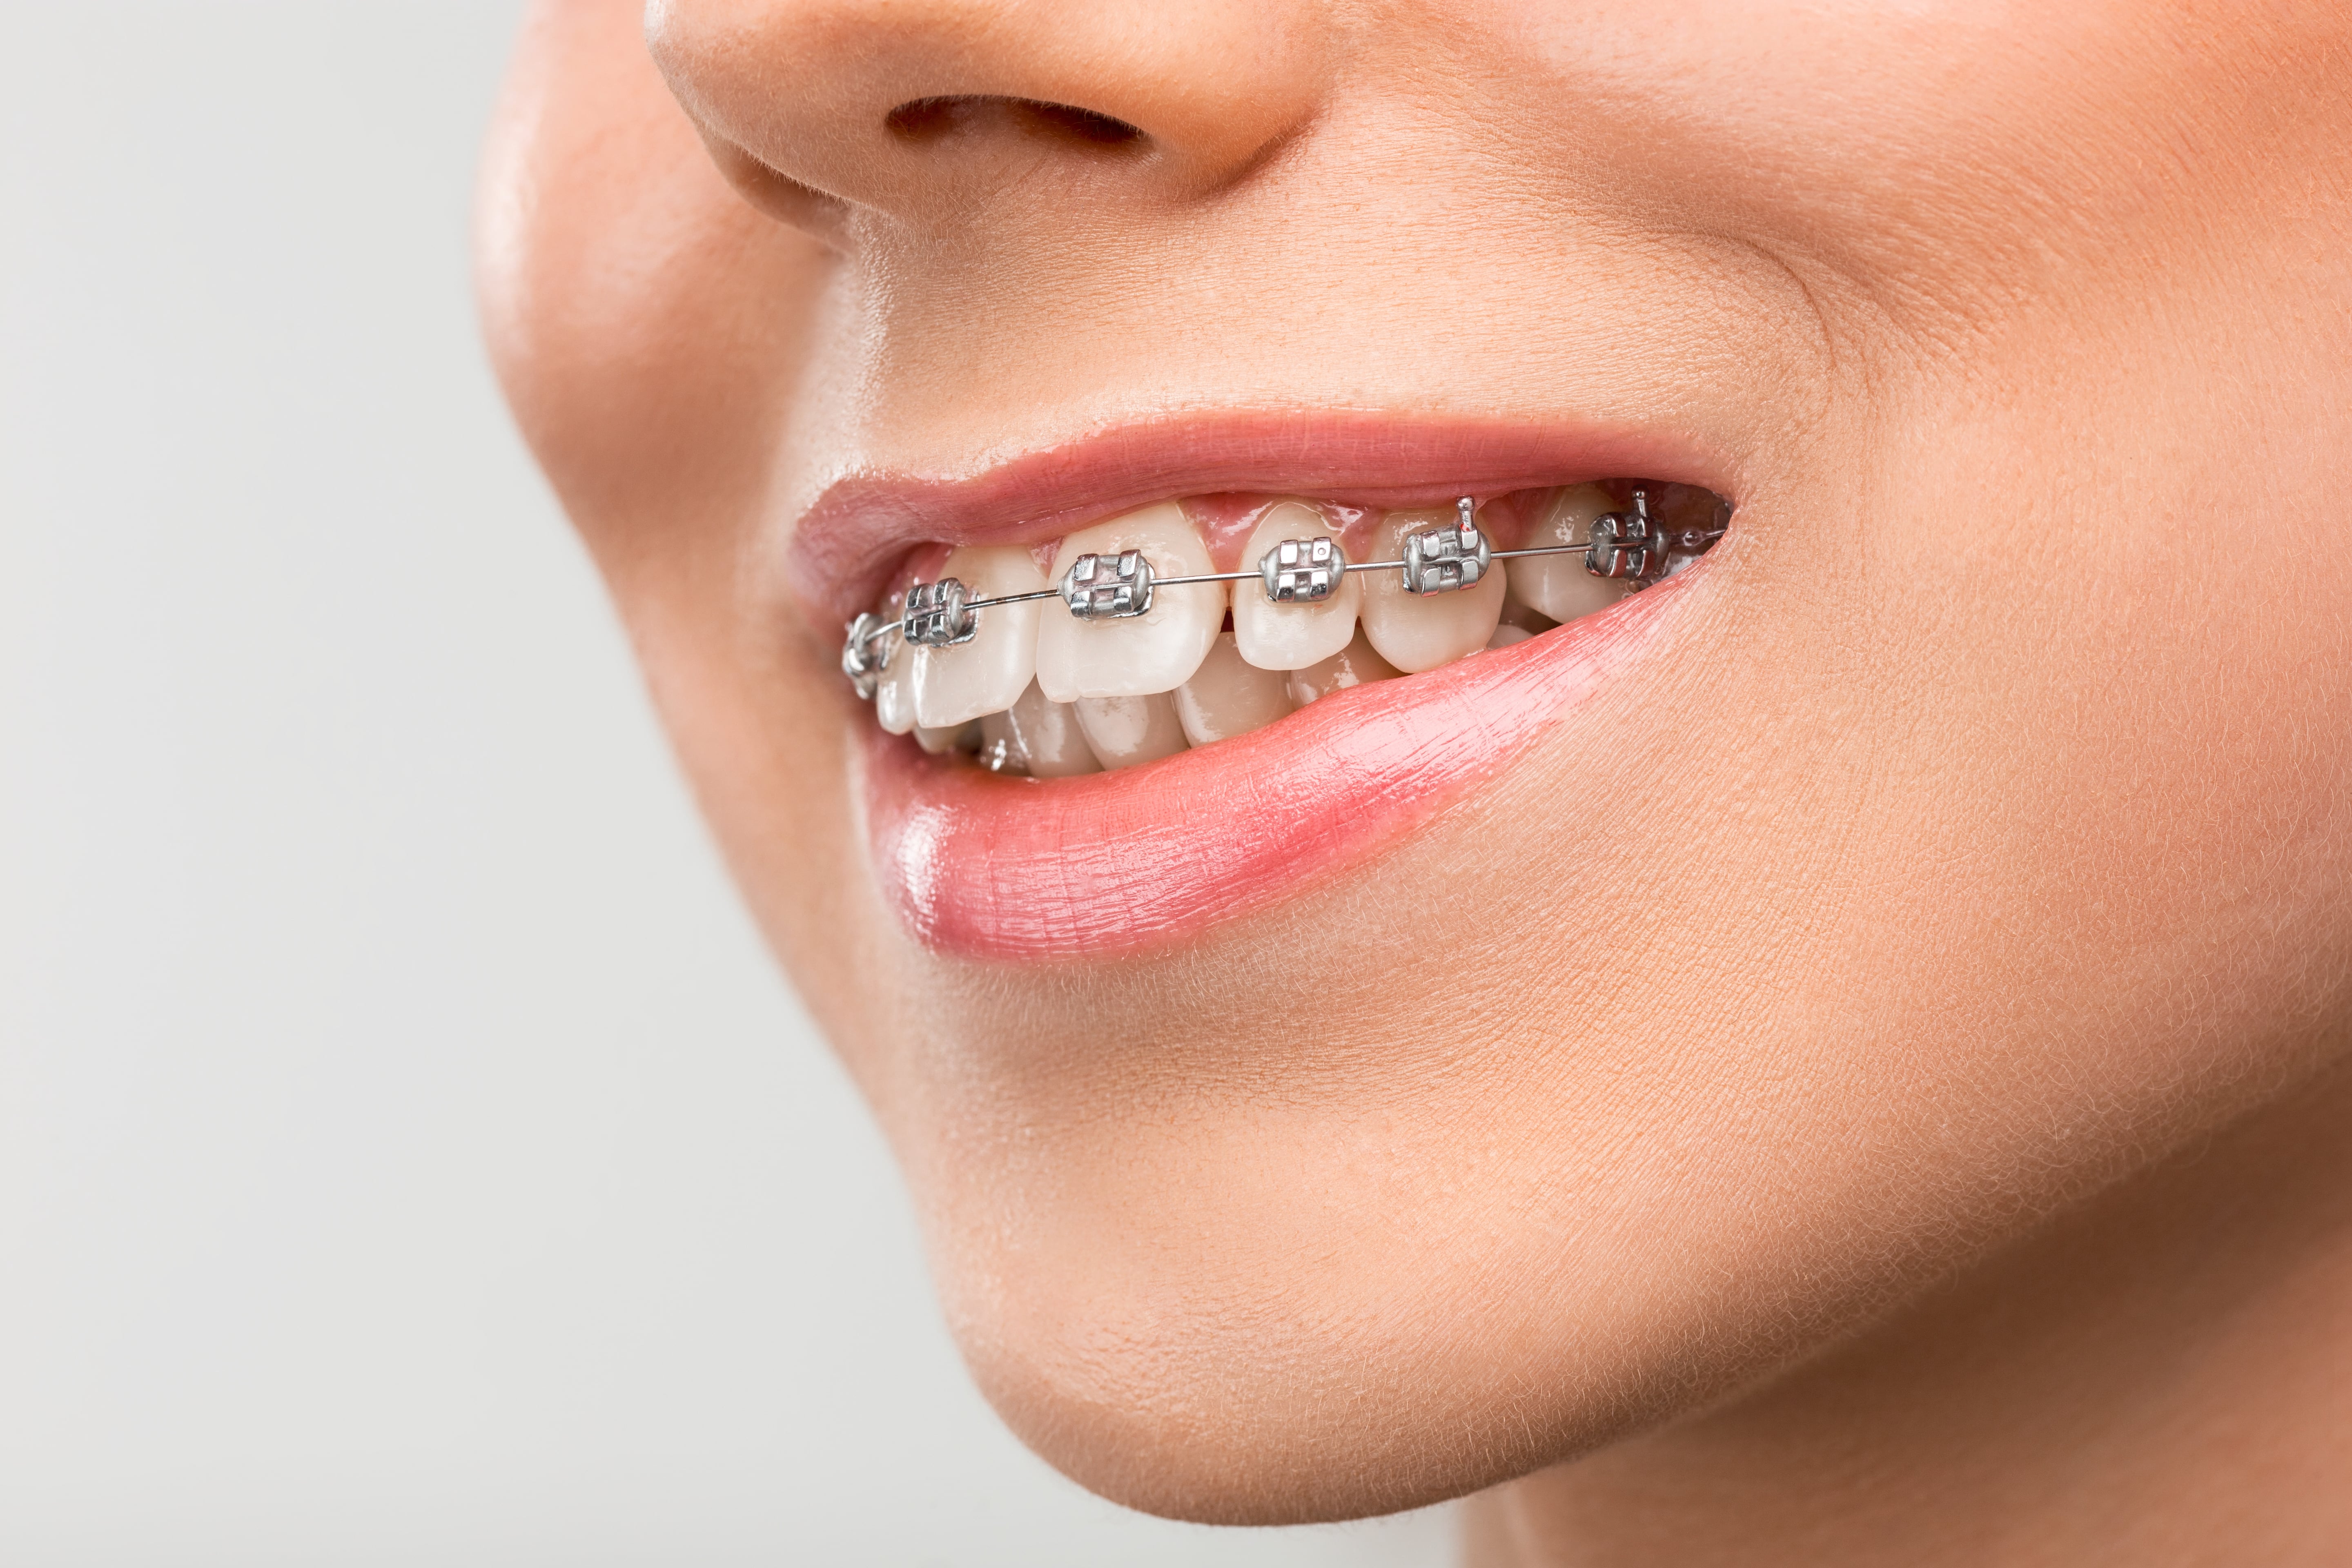 Orthodontic Dental Braces